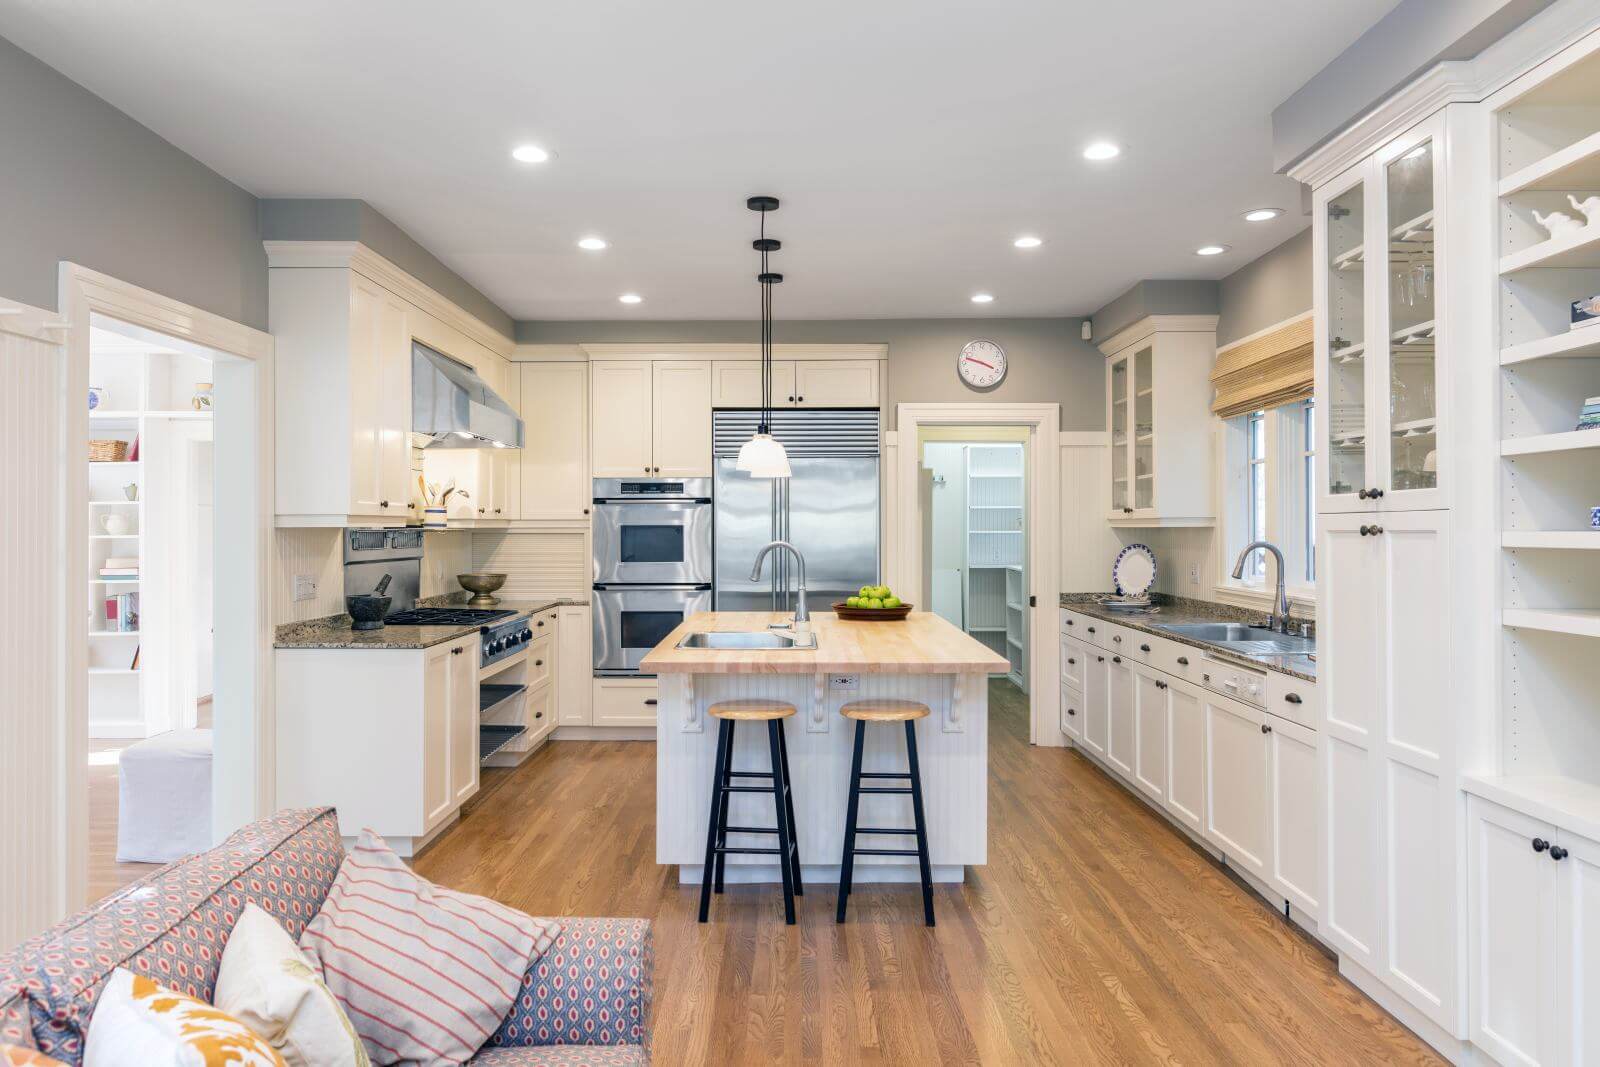 Amazing Luxury Kitchen Interior in white with wooden floor and kitchen island.